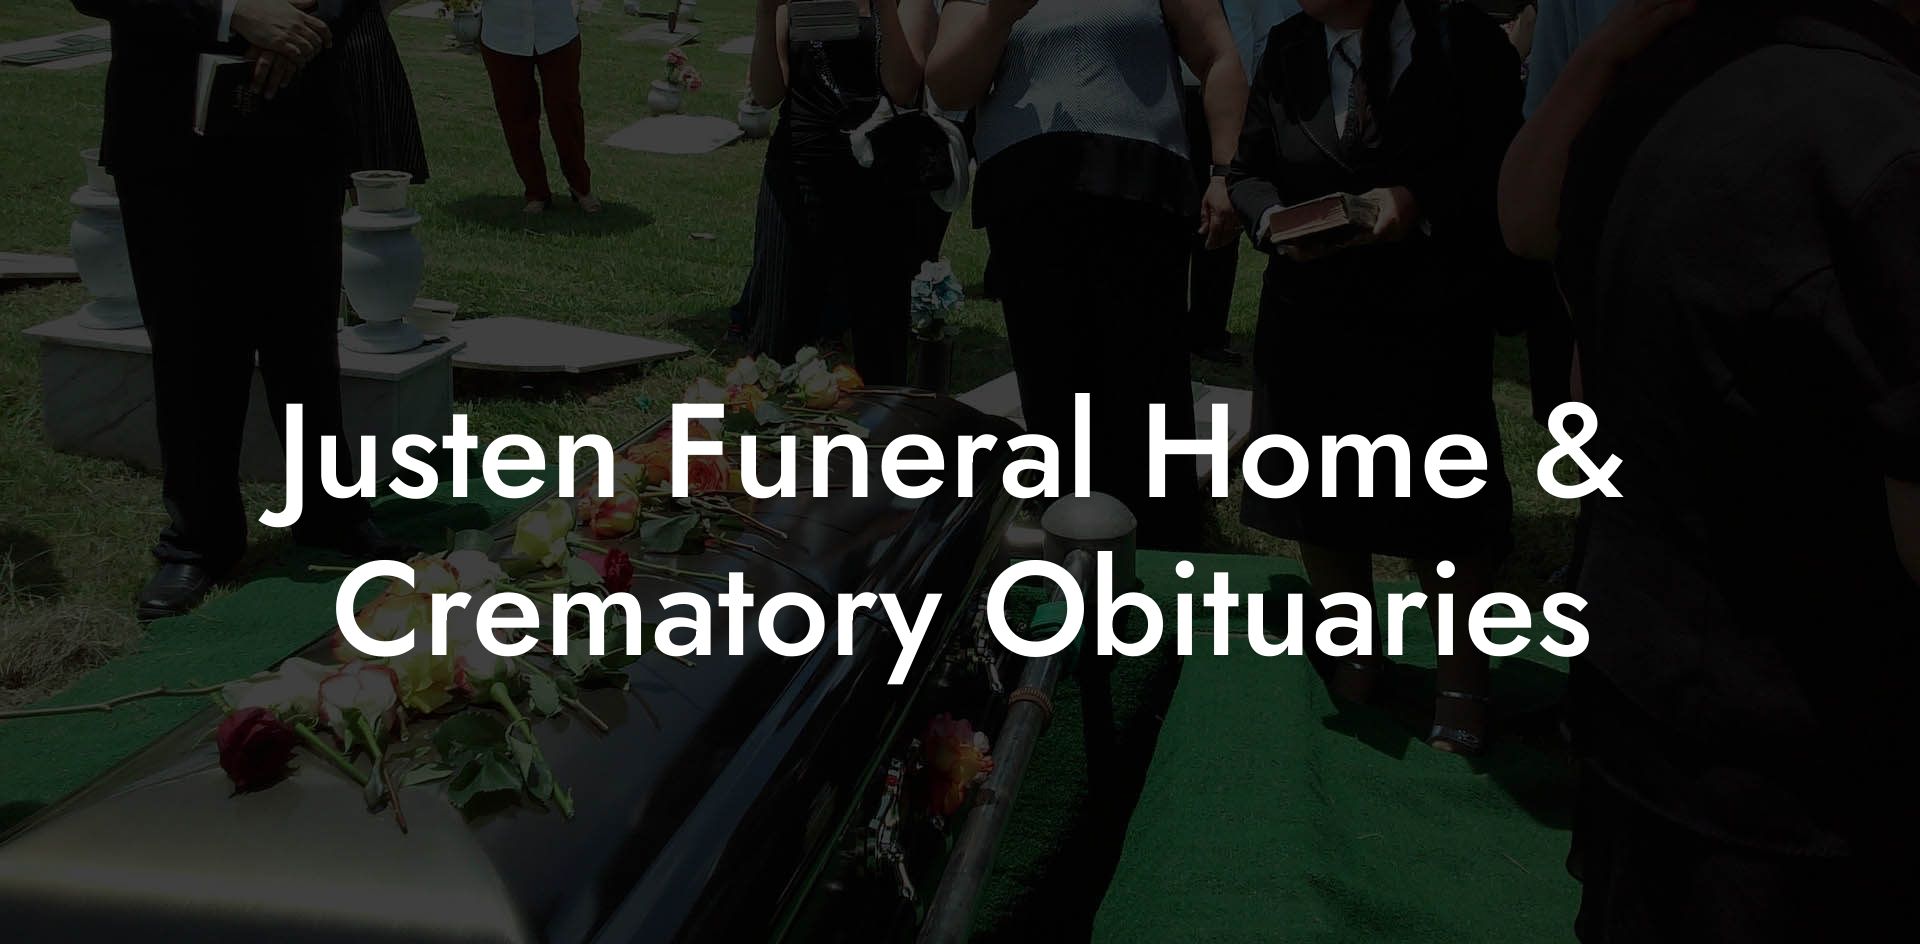 Justen Funeral Home & Crematory Obituaries